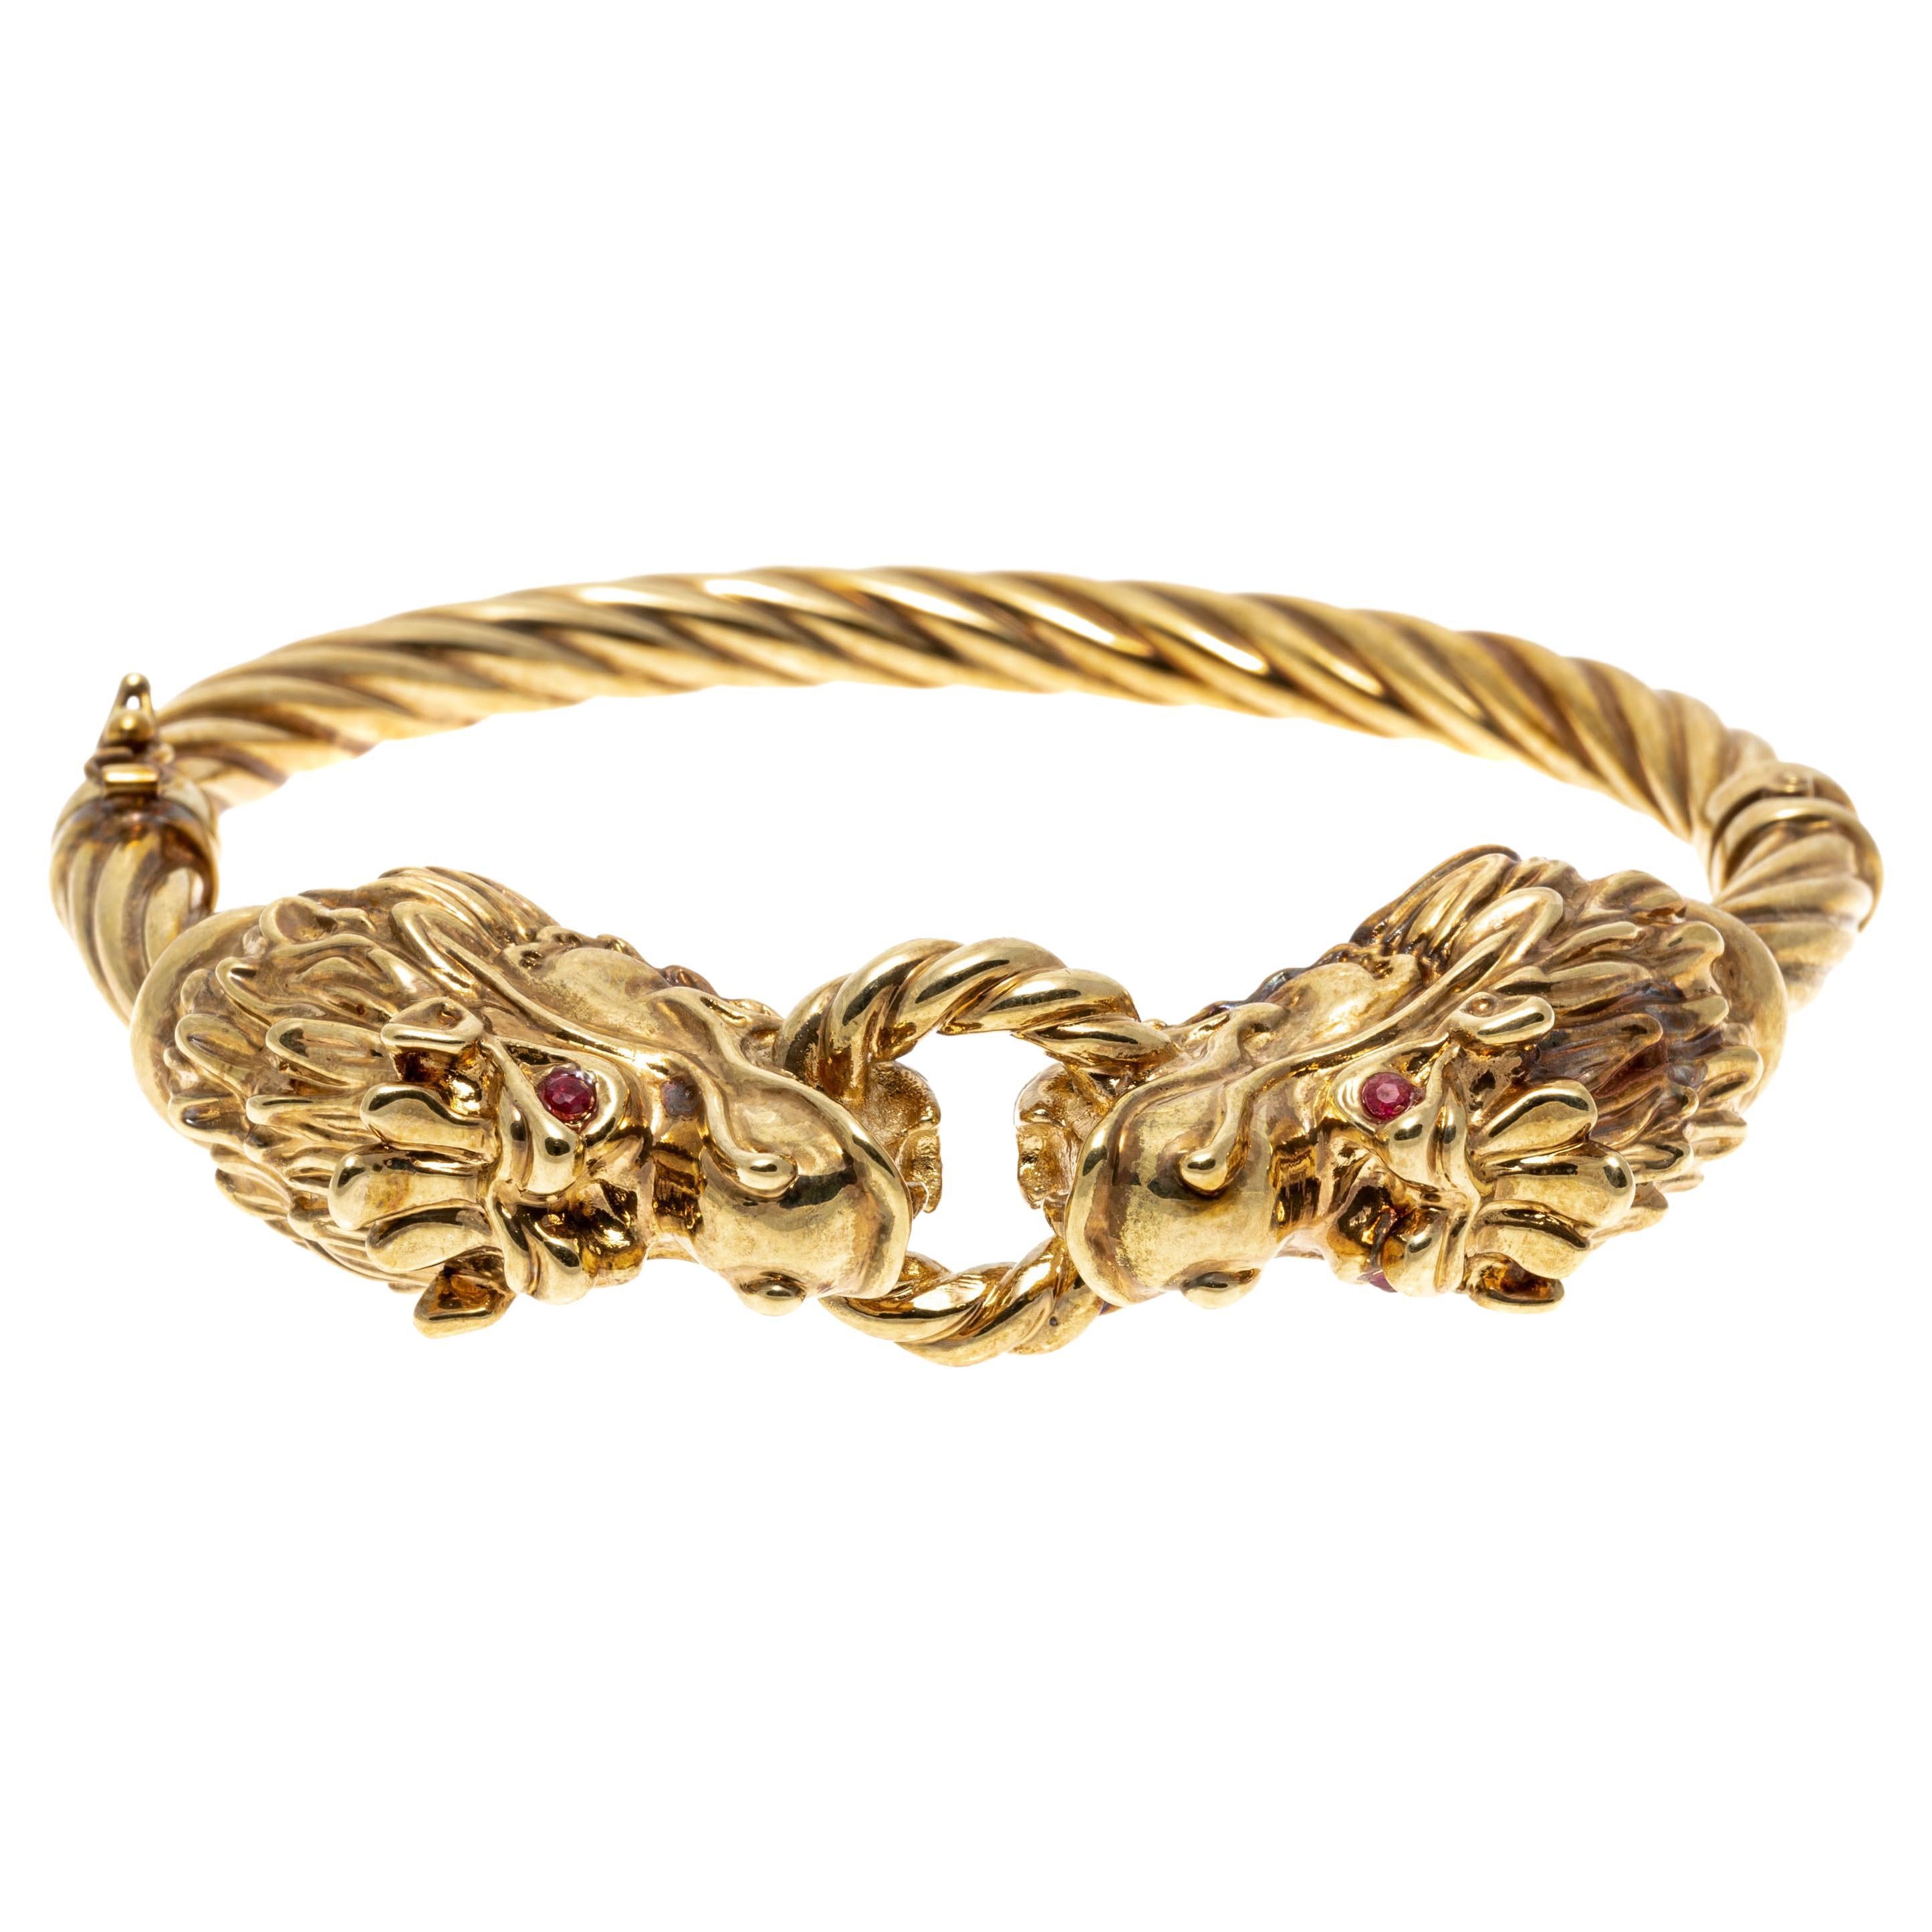 14k Yellow Gold Facing Dragons Hinged Twisted Bangle Bracelet